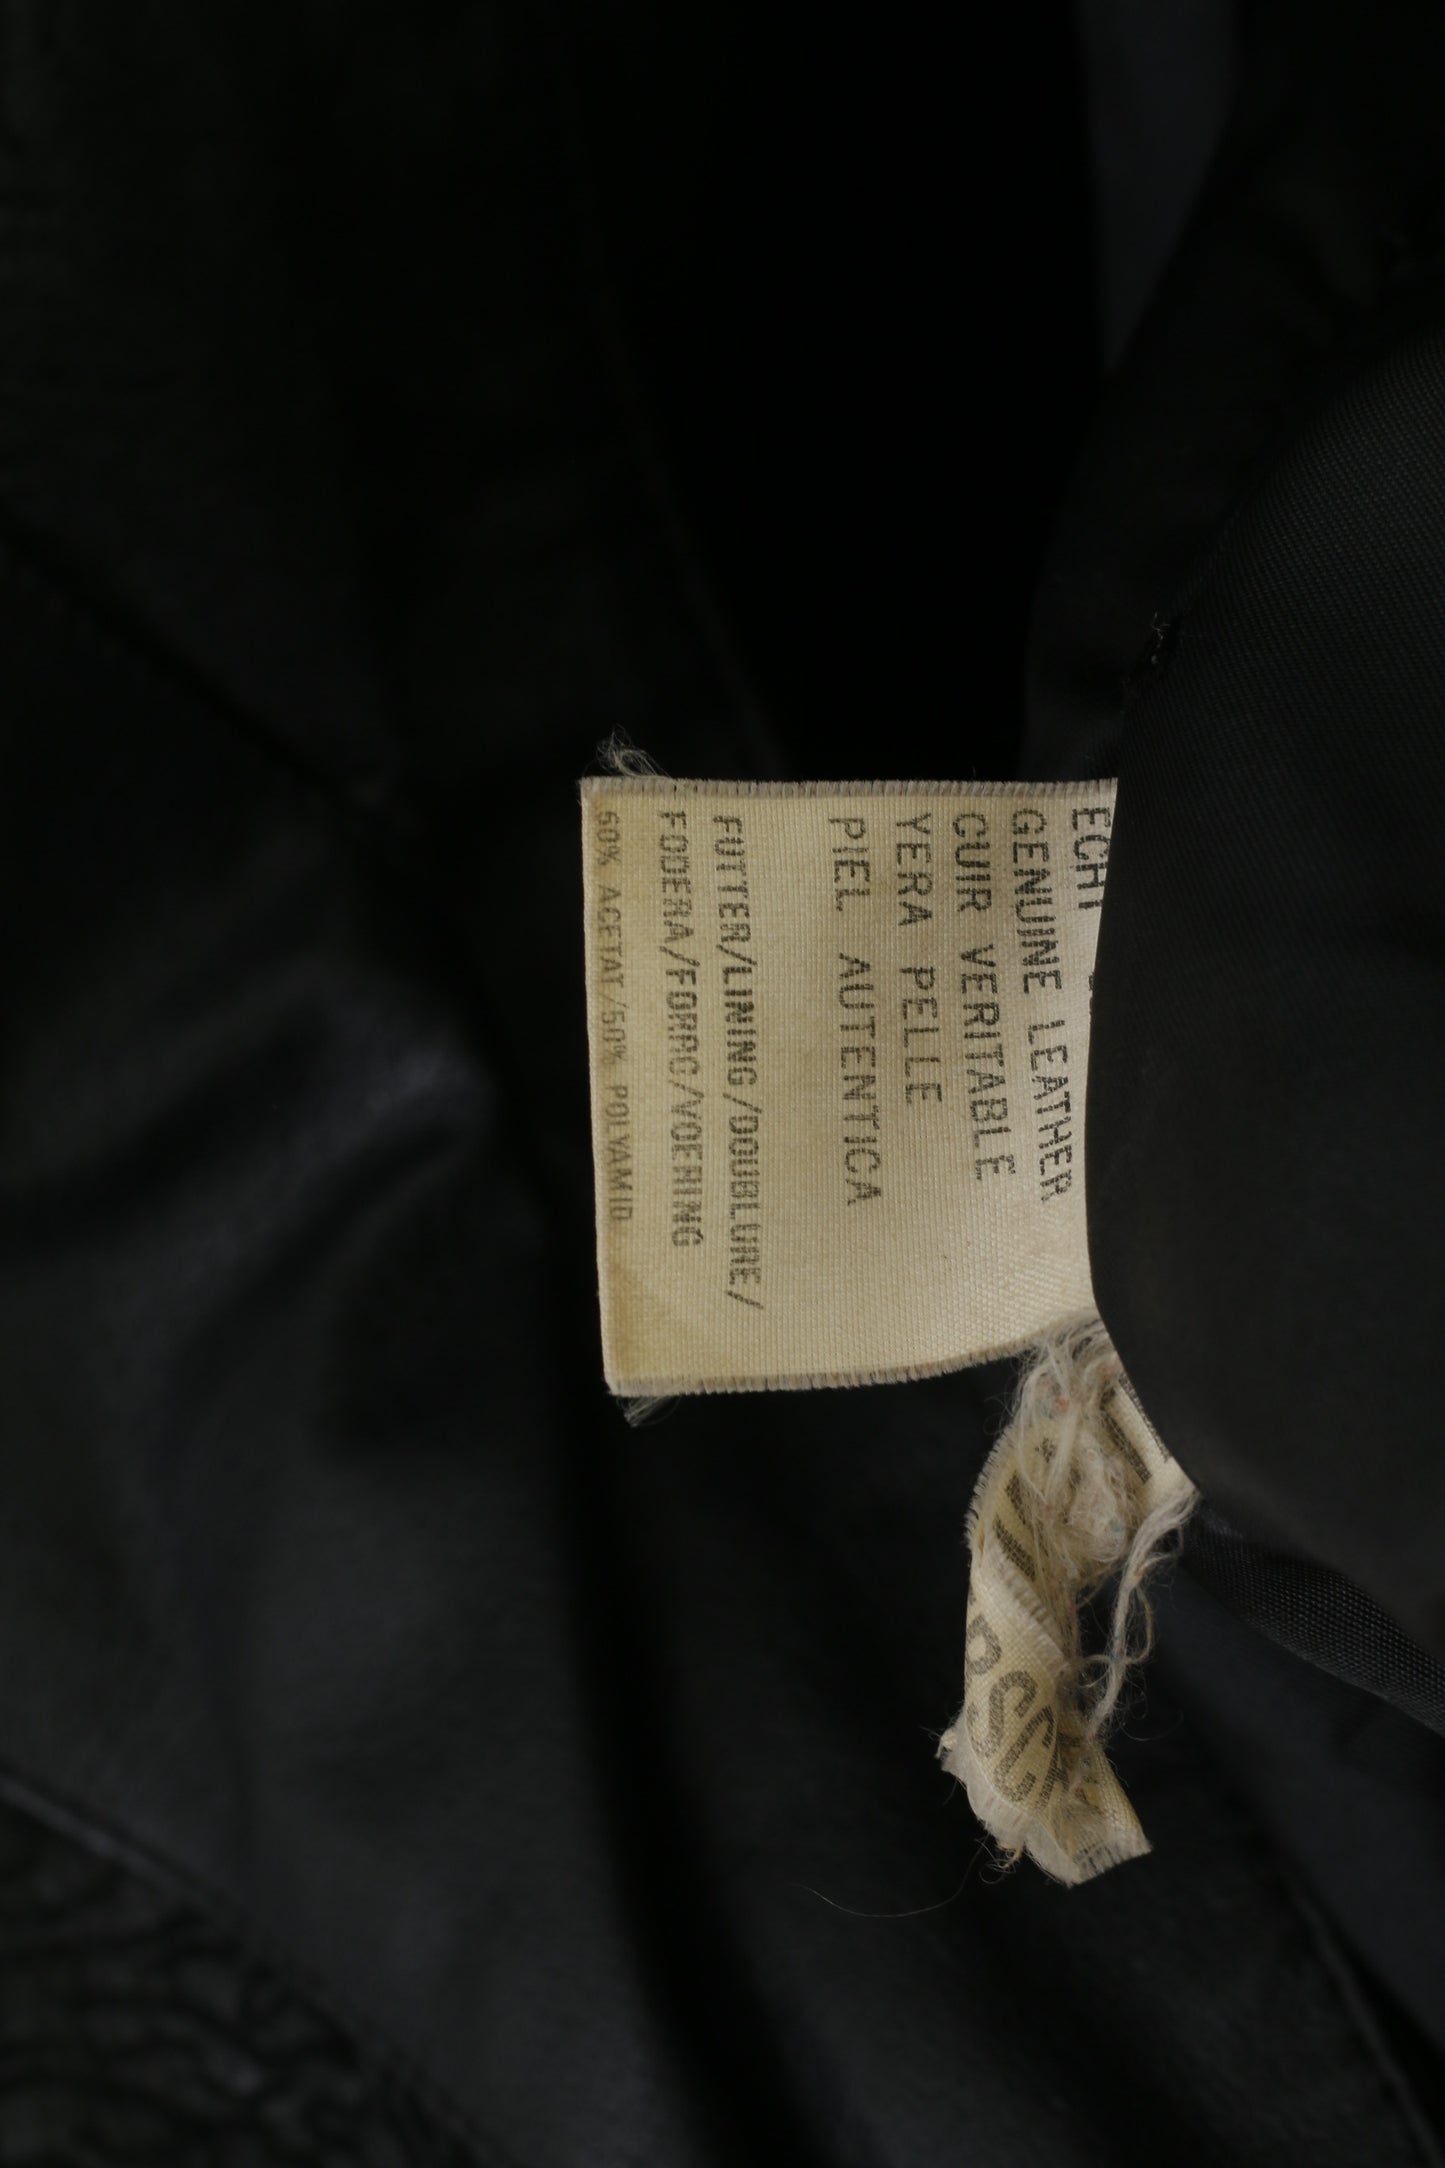 Vintage Women XL Jacket Black Leather Bat Bomber Shoulder Pads Retro Top